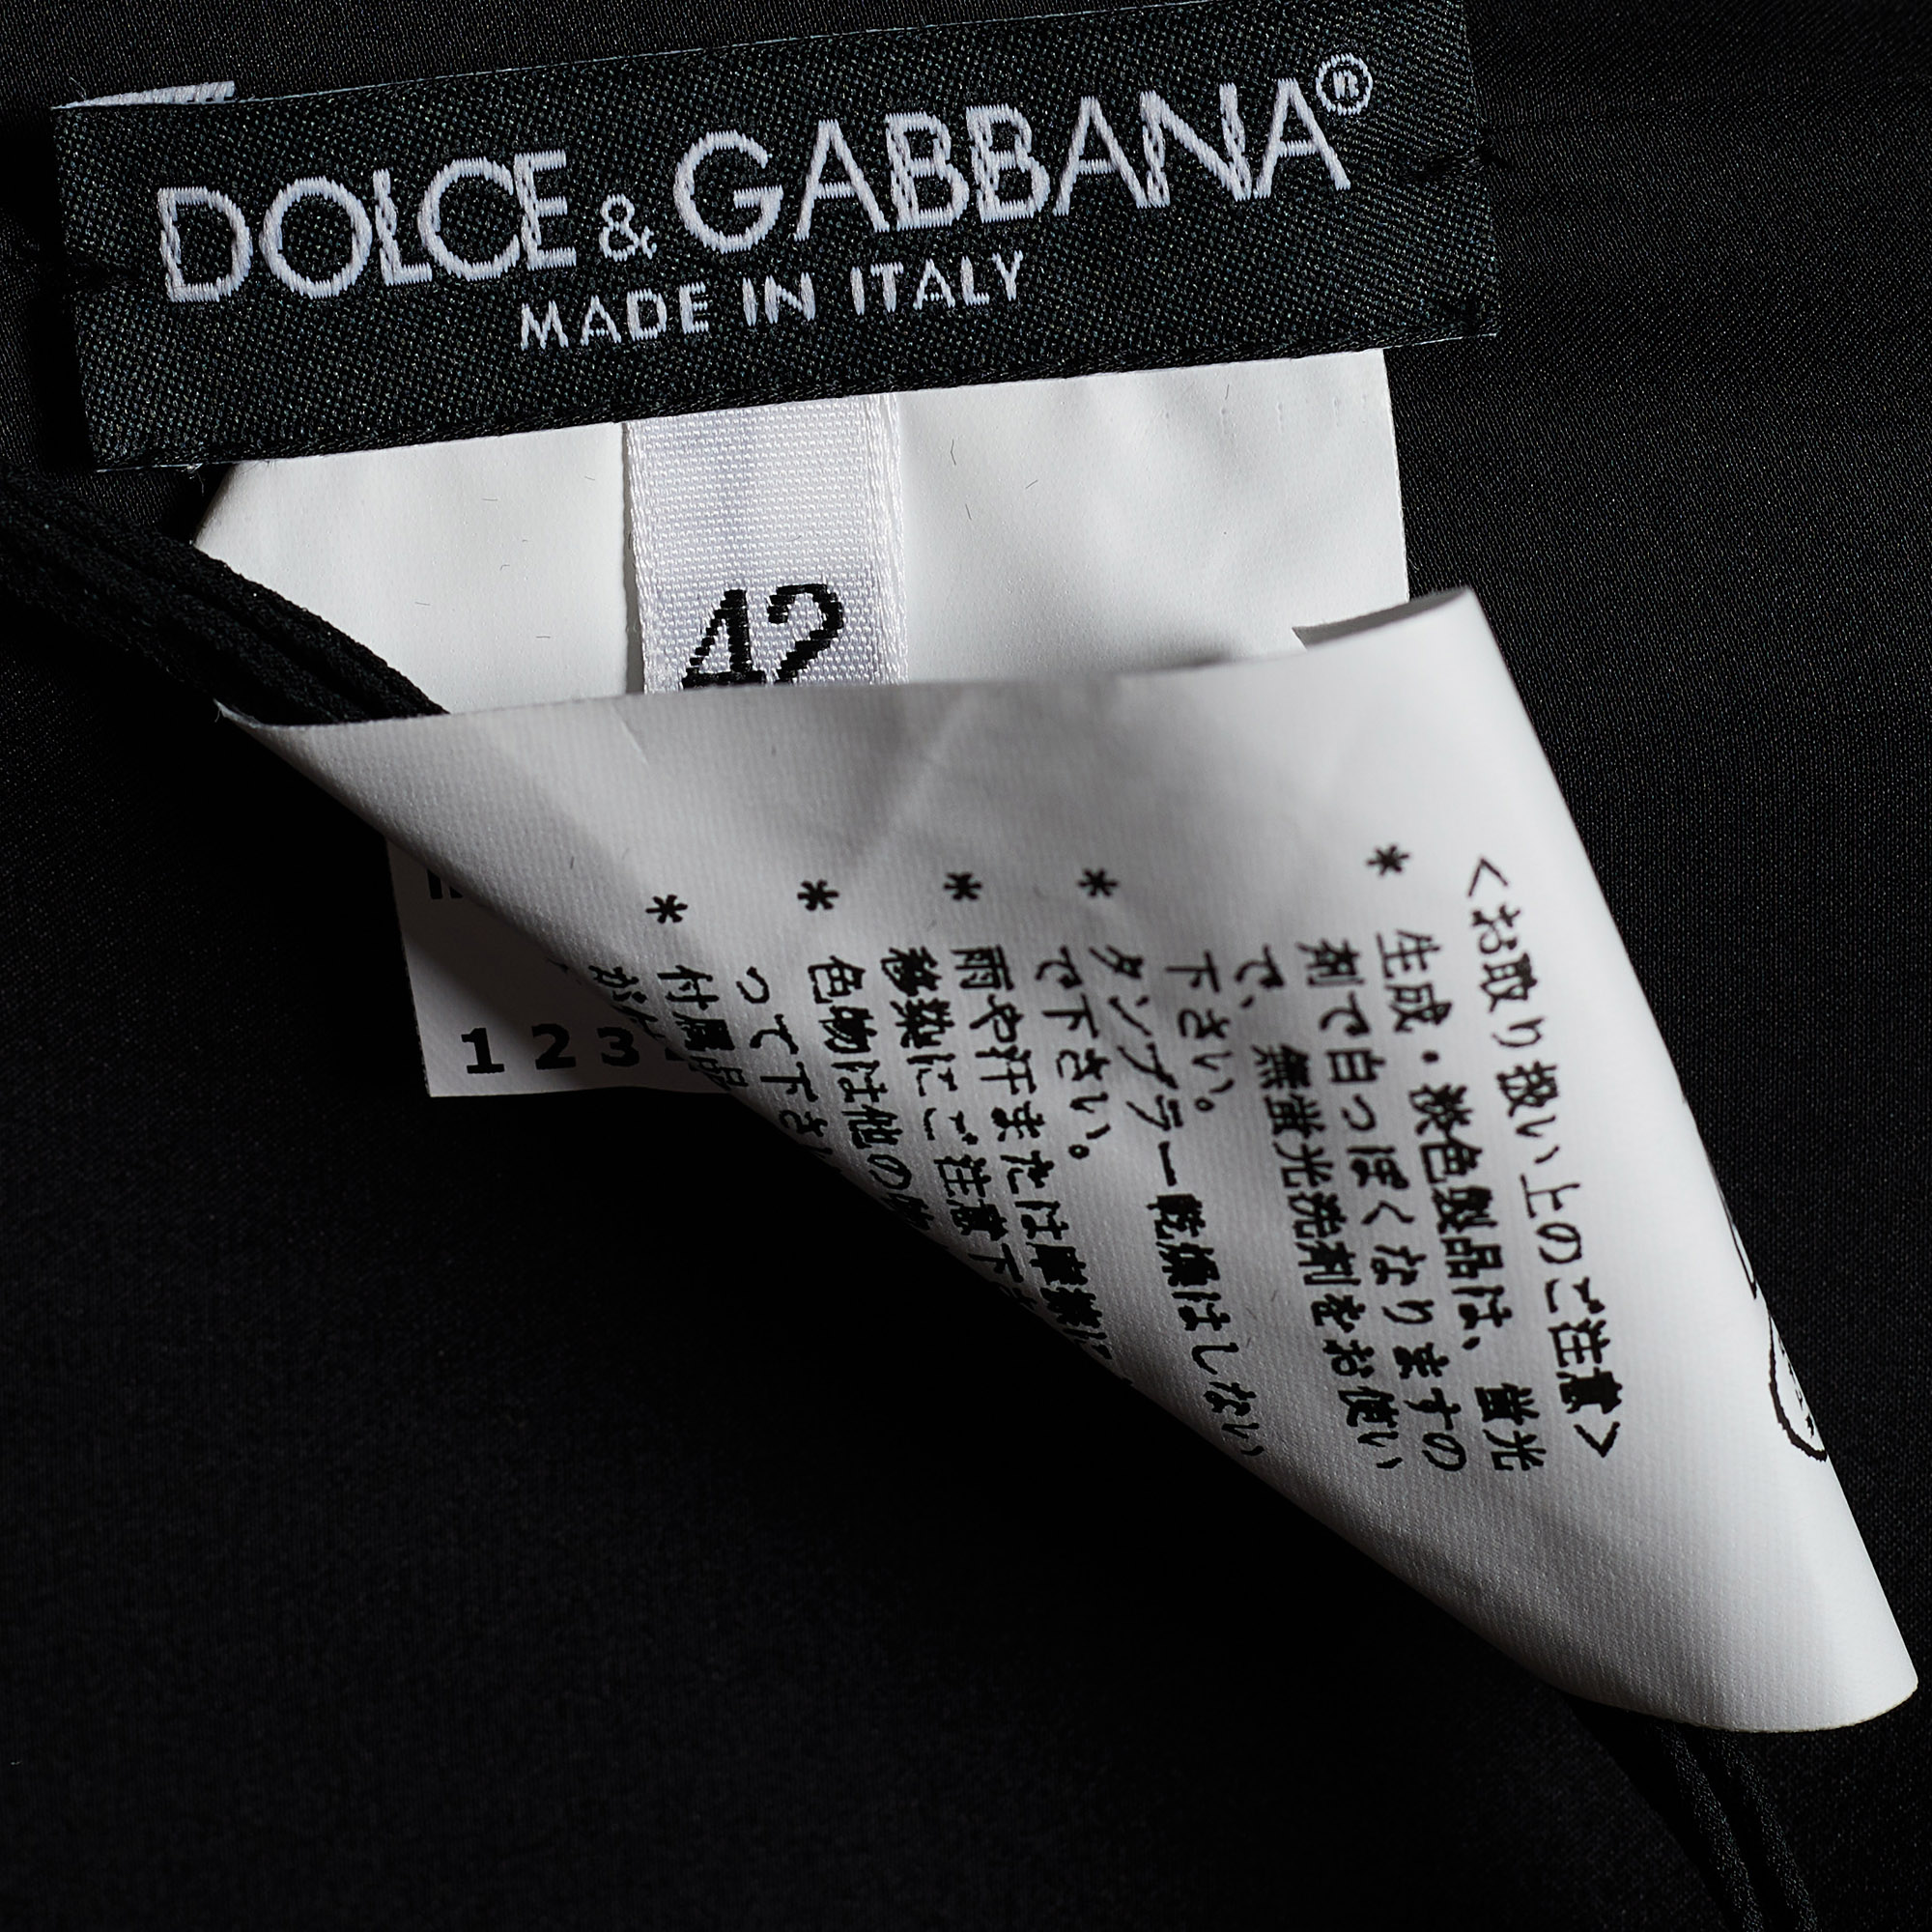 Dolce & Gabbana Black Silk Top M